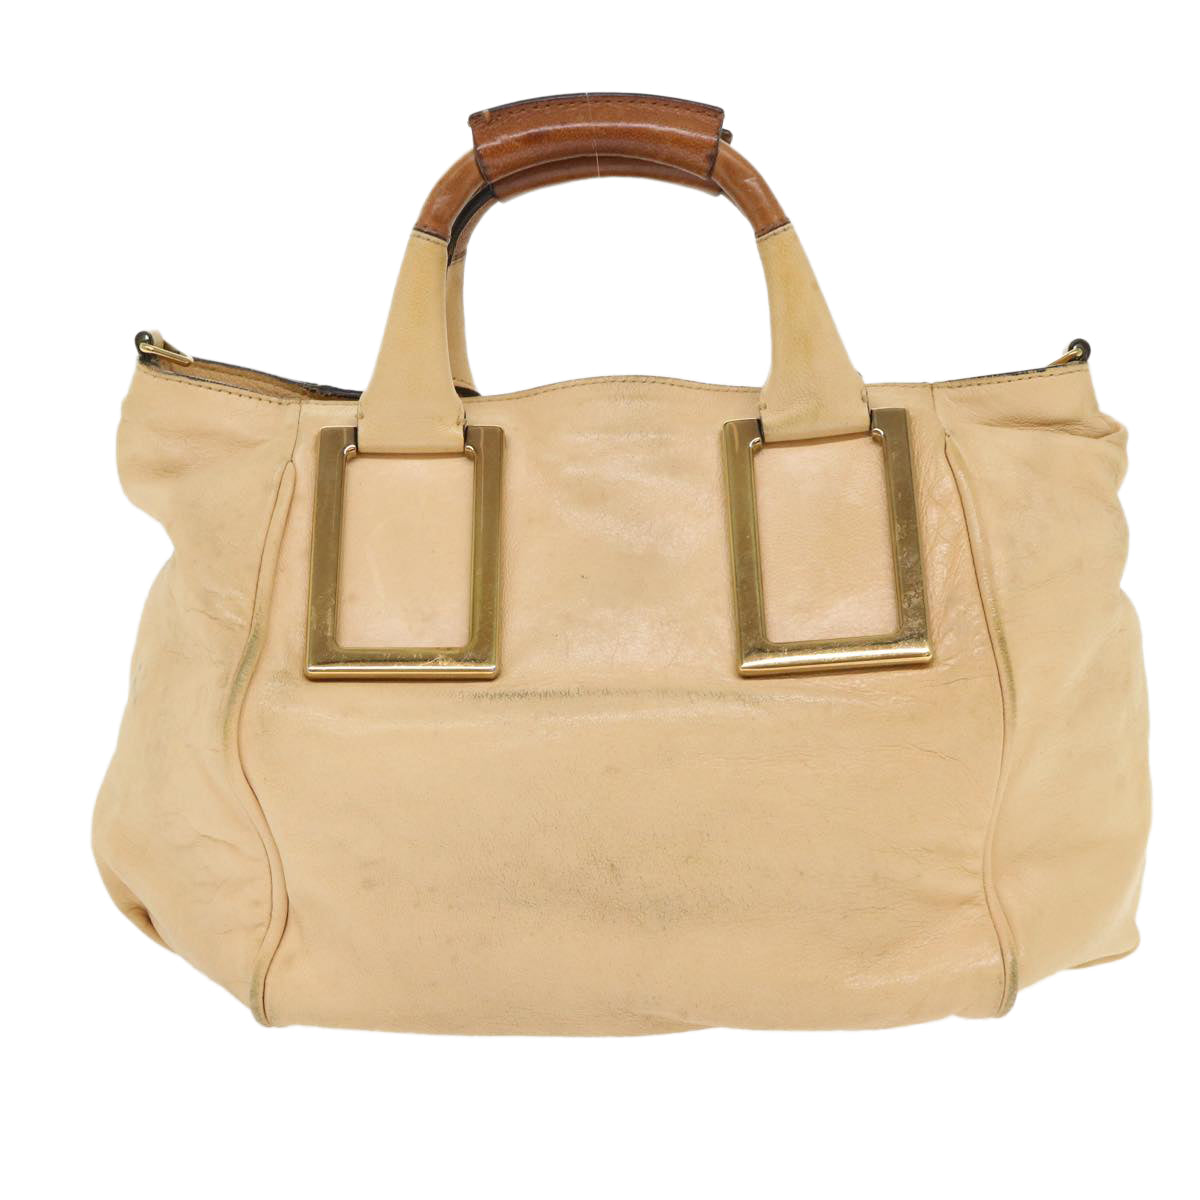 Chloe Hand Bag Leather 2way Shoulder Bag Beige 02-11-50 Auth bs6747 - 0